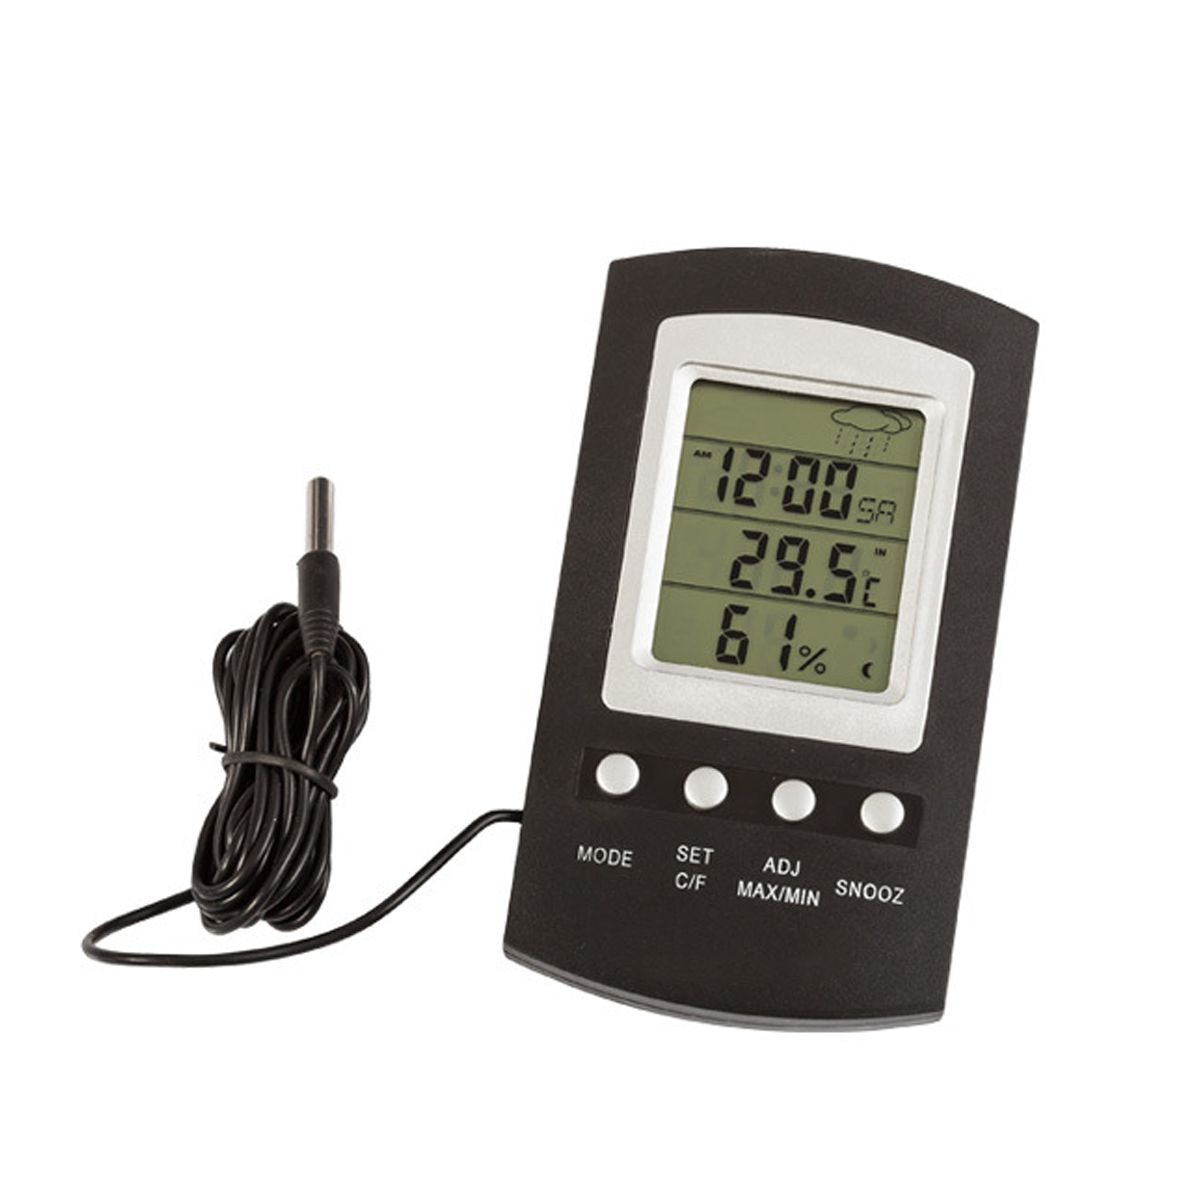 LCD-Digital-MaxMin-Thermometer-Hygrometer-Alarm-Temperature-Humidity-Tester-Reptile-1274327